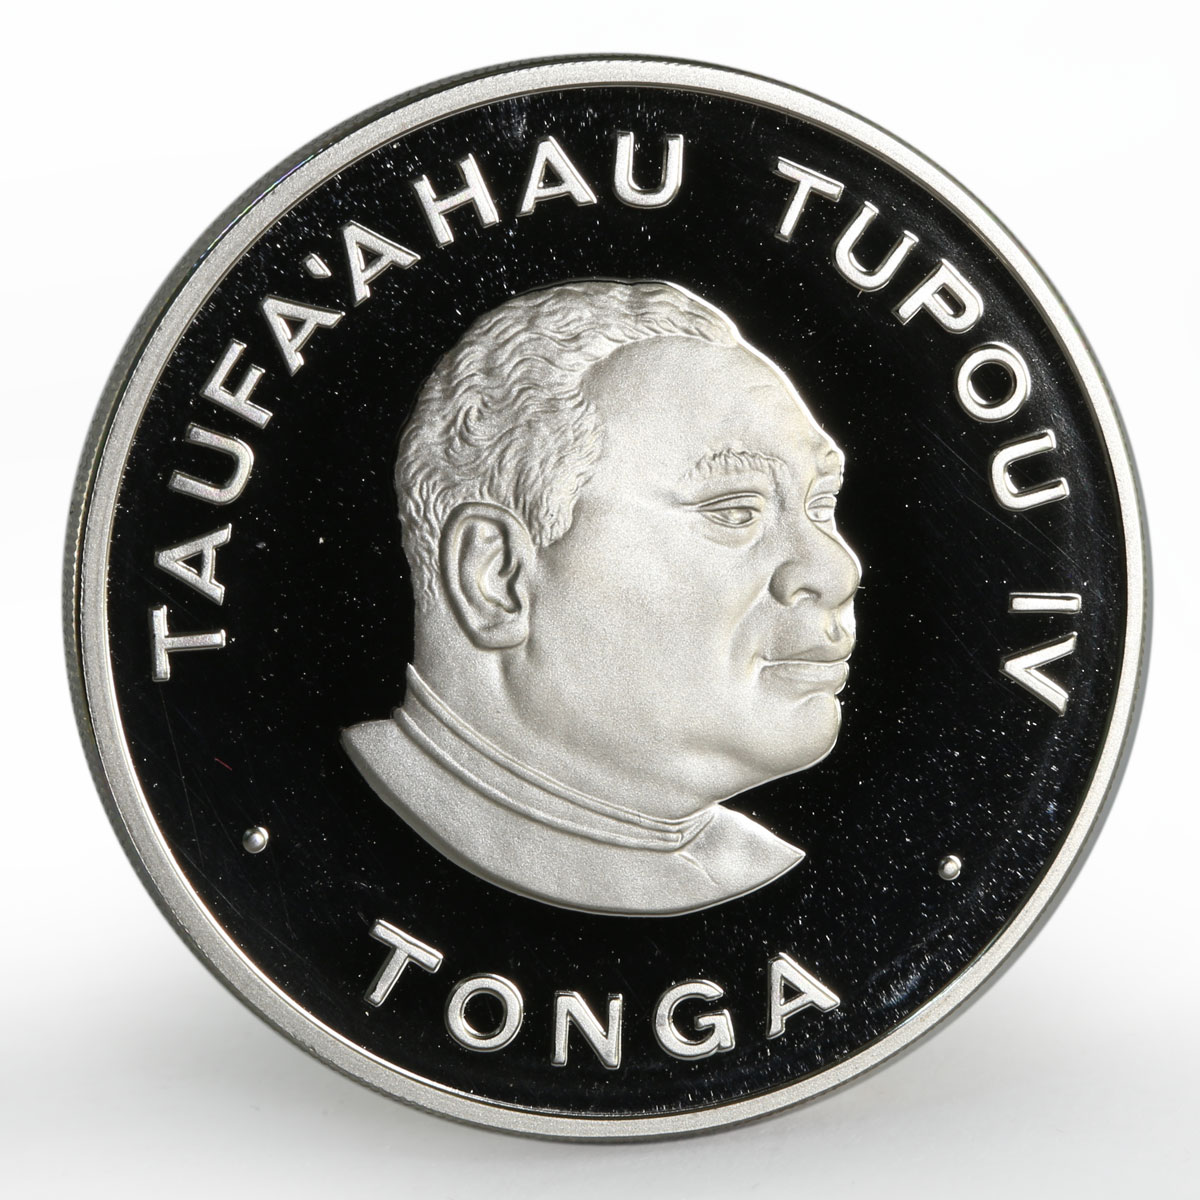 Tonga 5 paanga International Games Relay proof nickel coin 1984